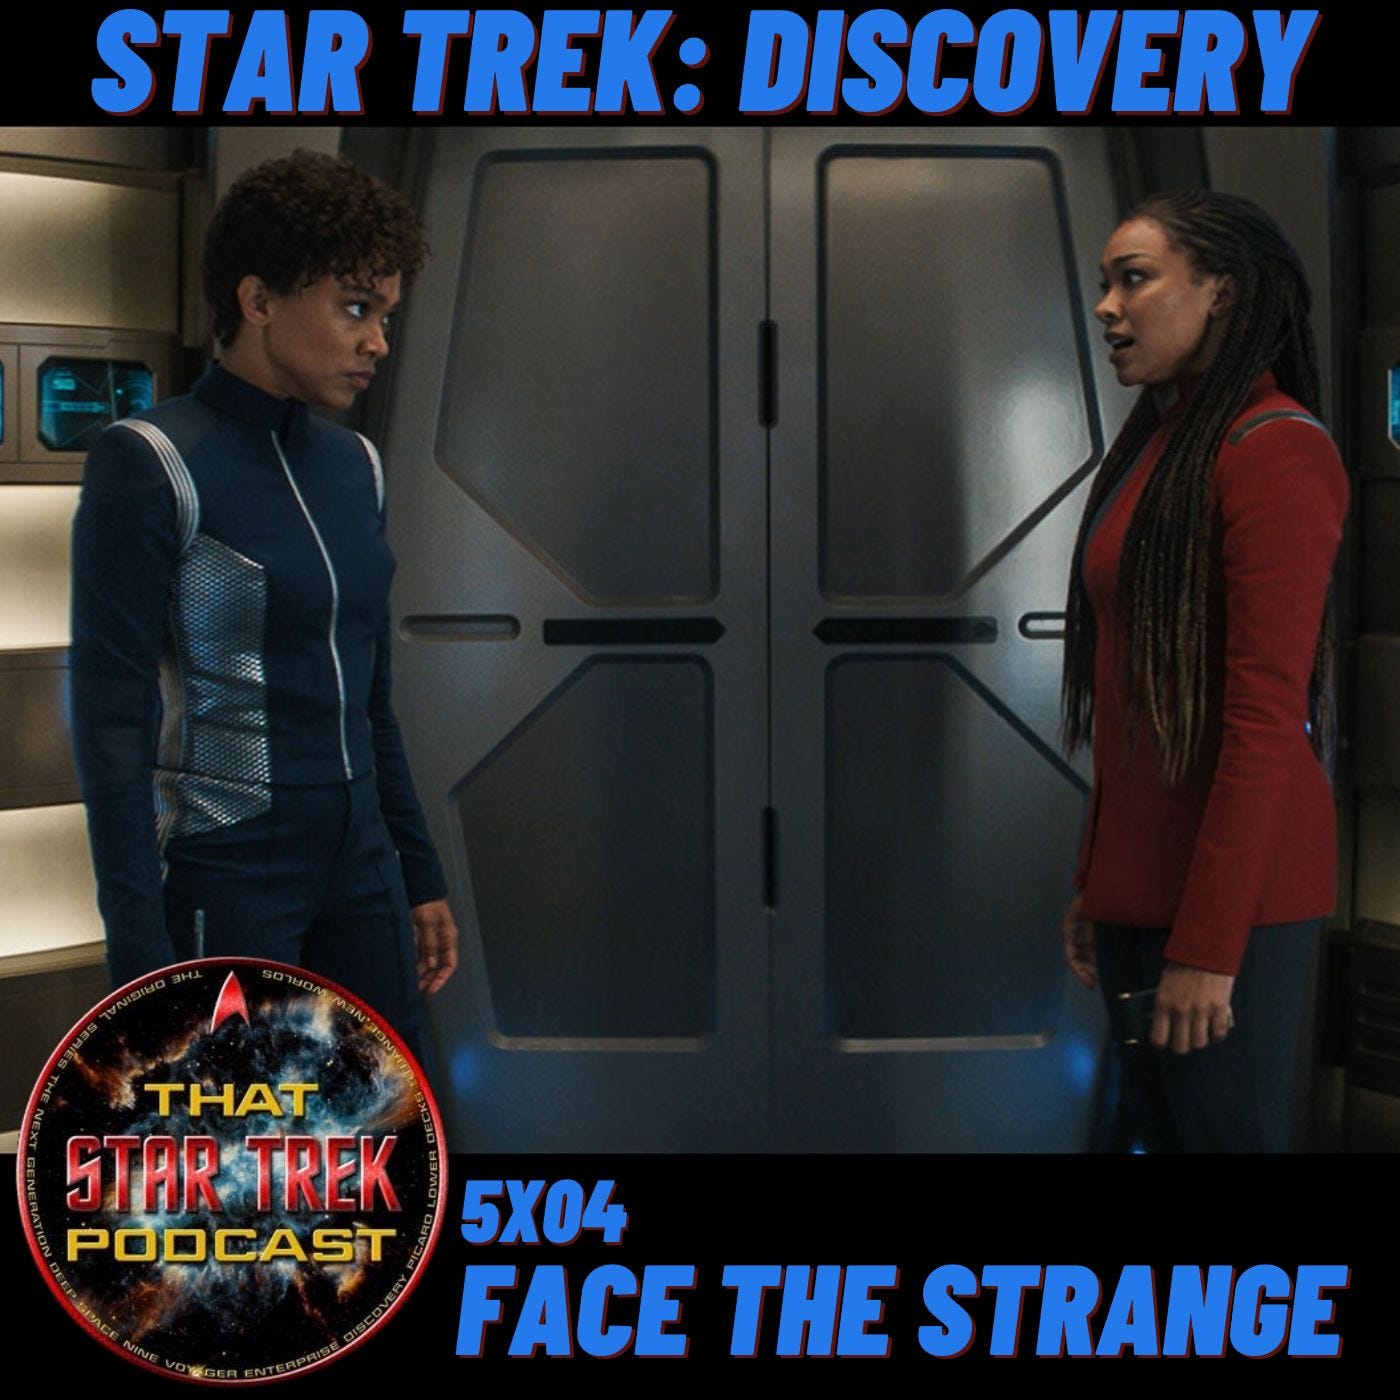 Star Trek Discovery 5x04: Face the Strange